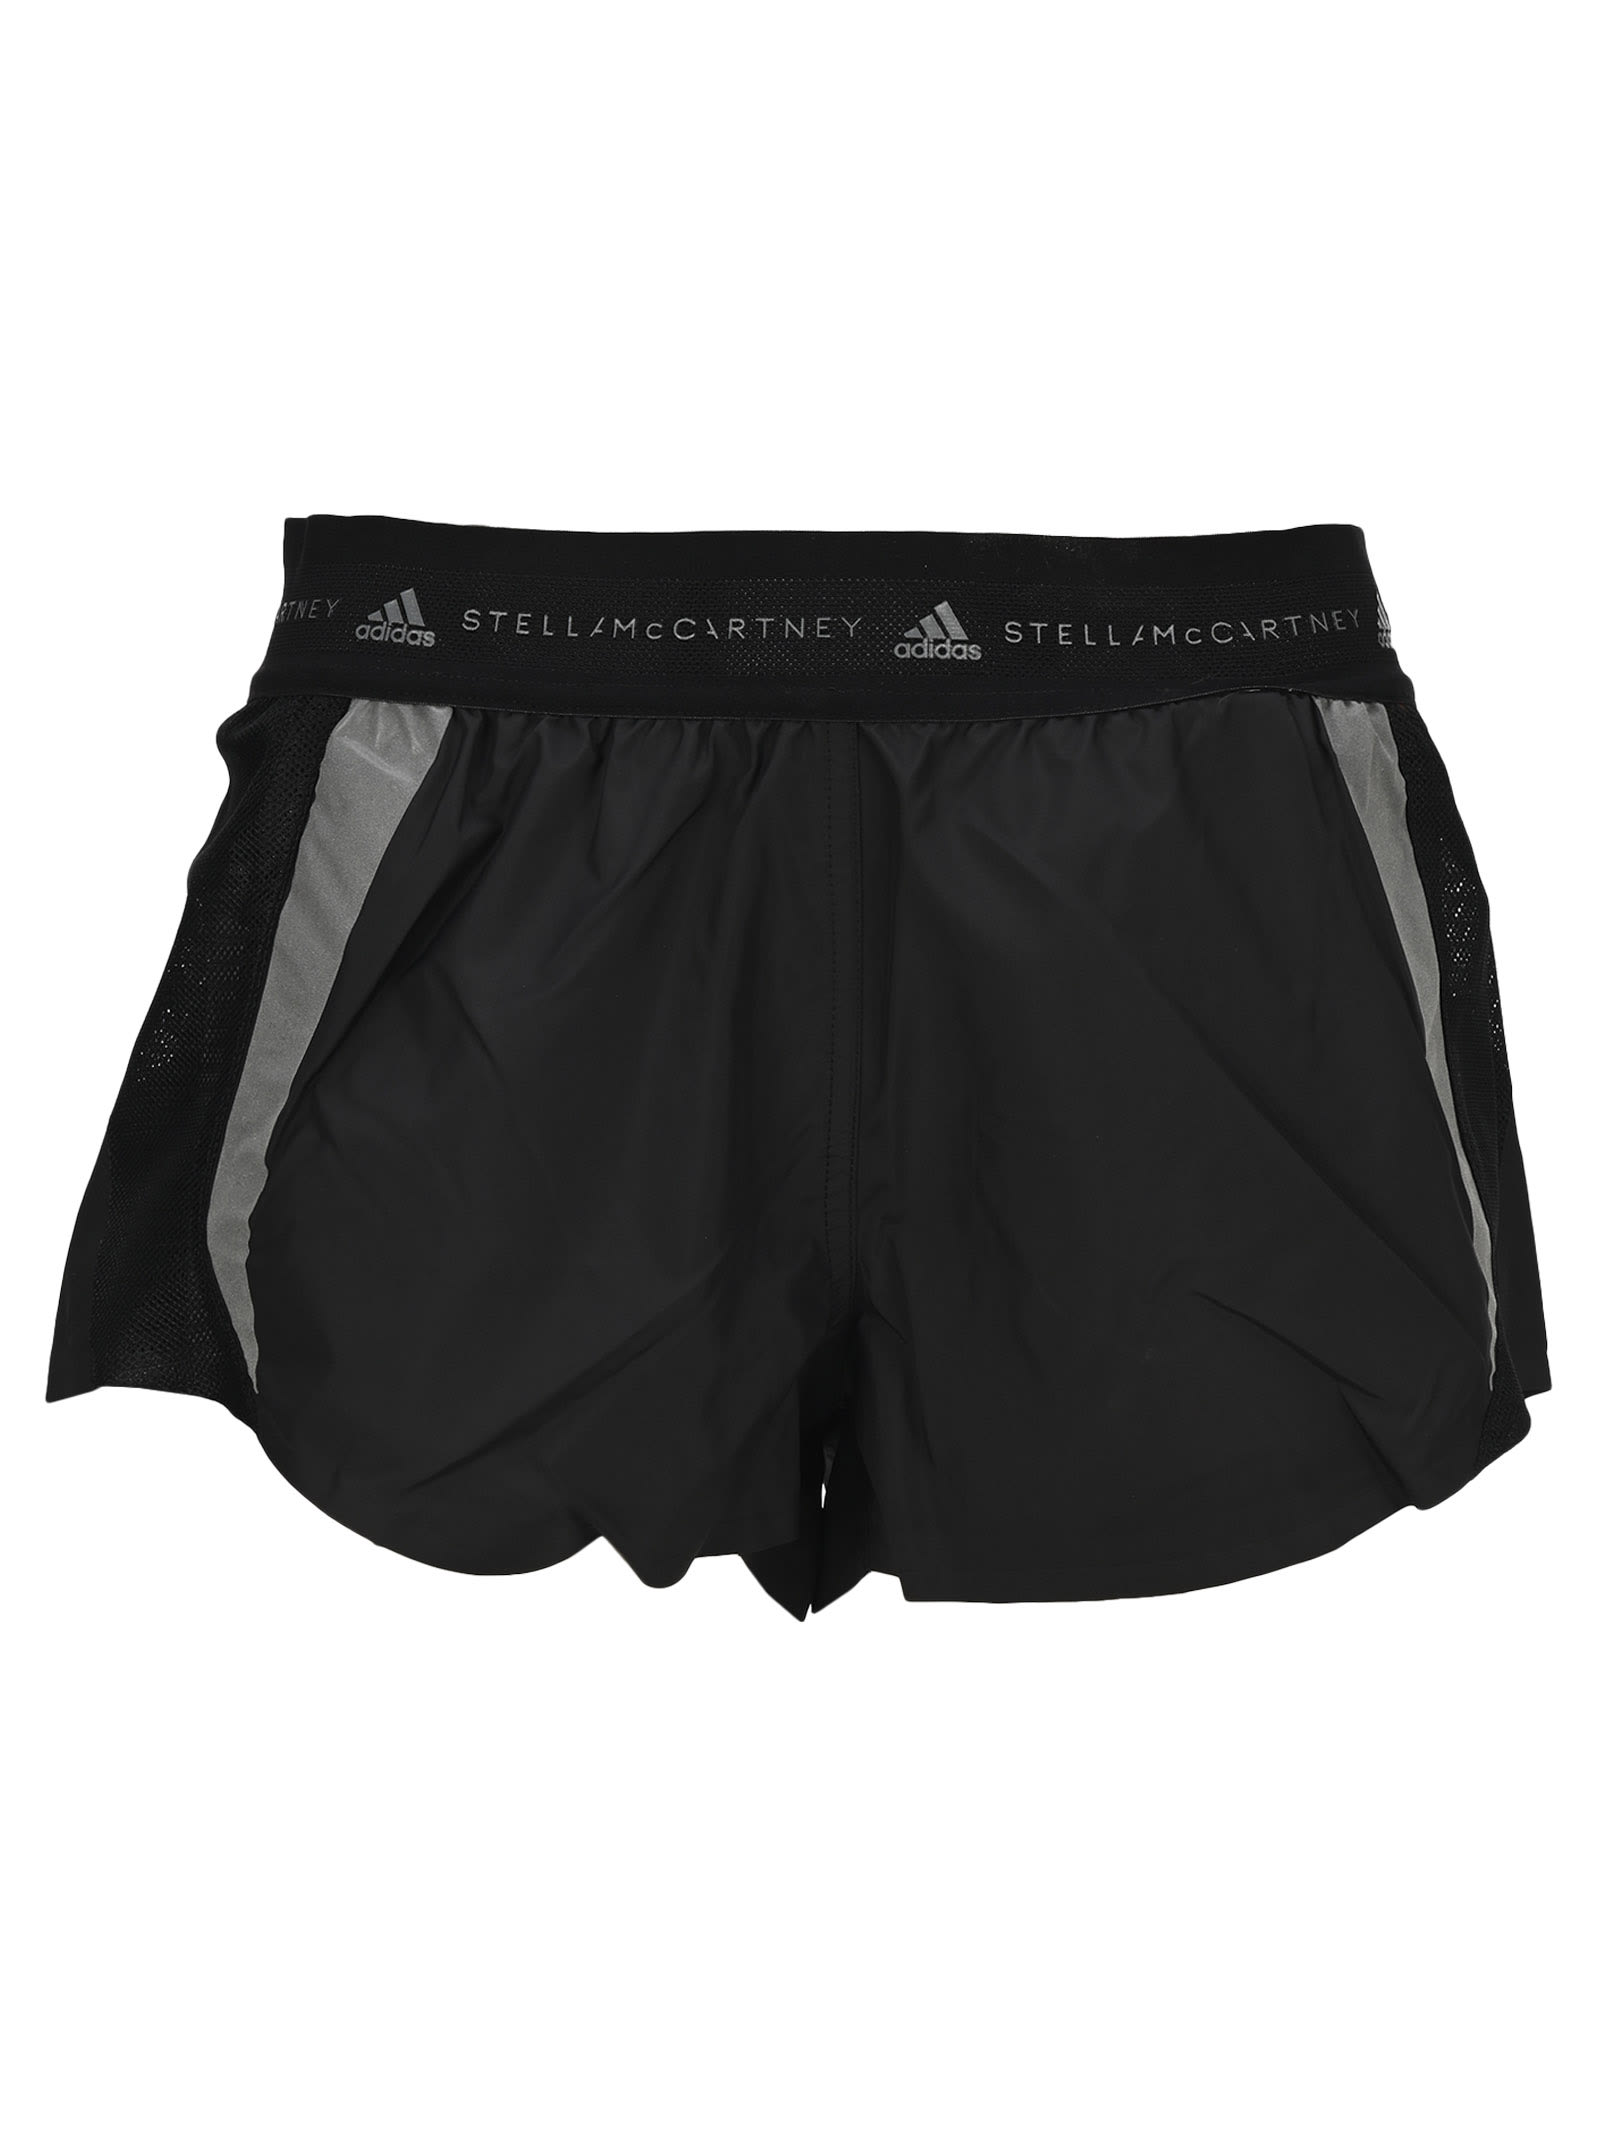 stella mccartney adidas running shorts